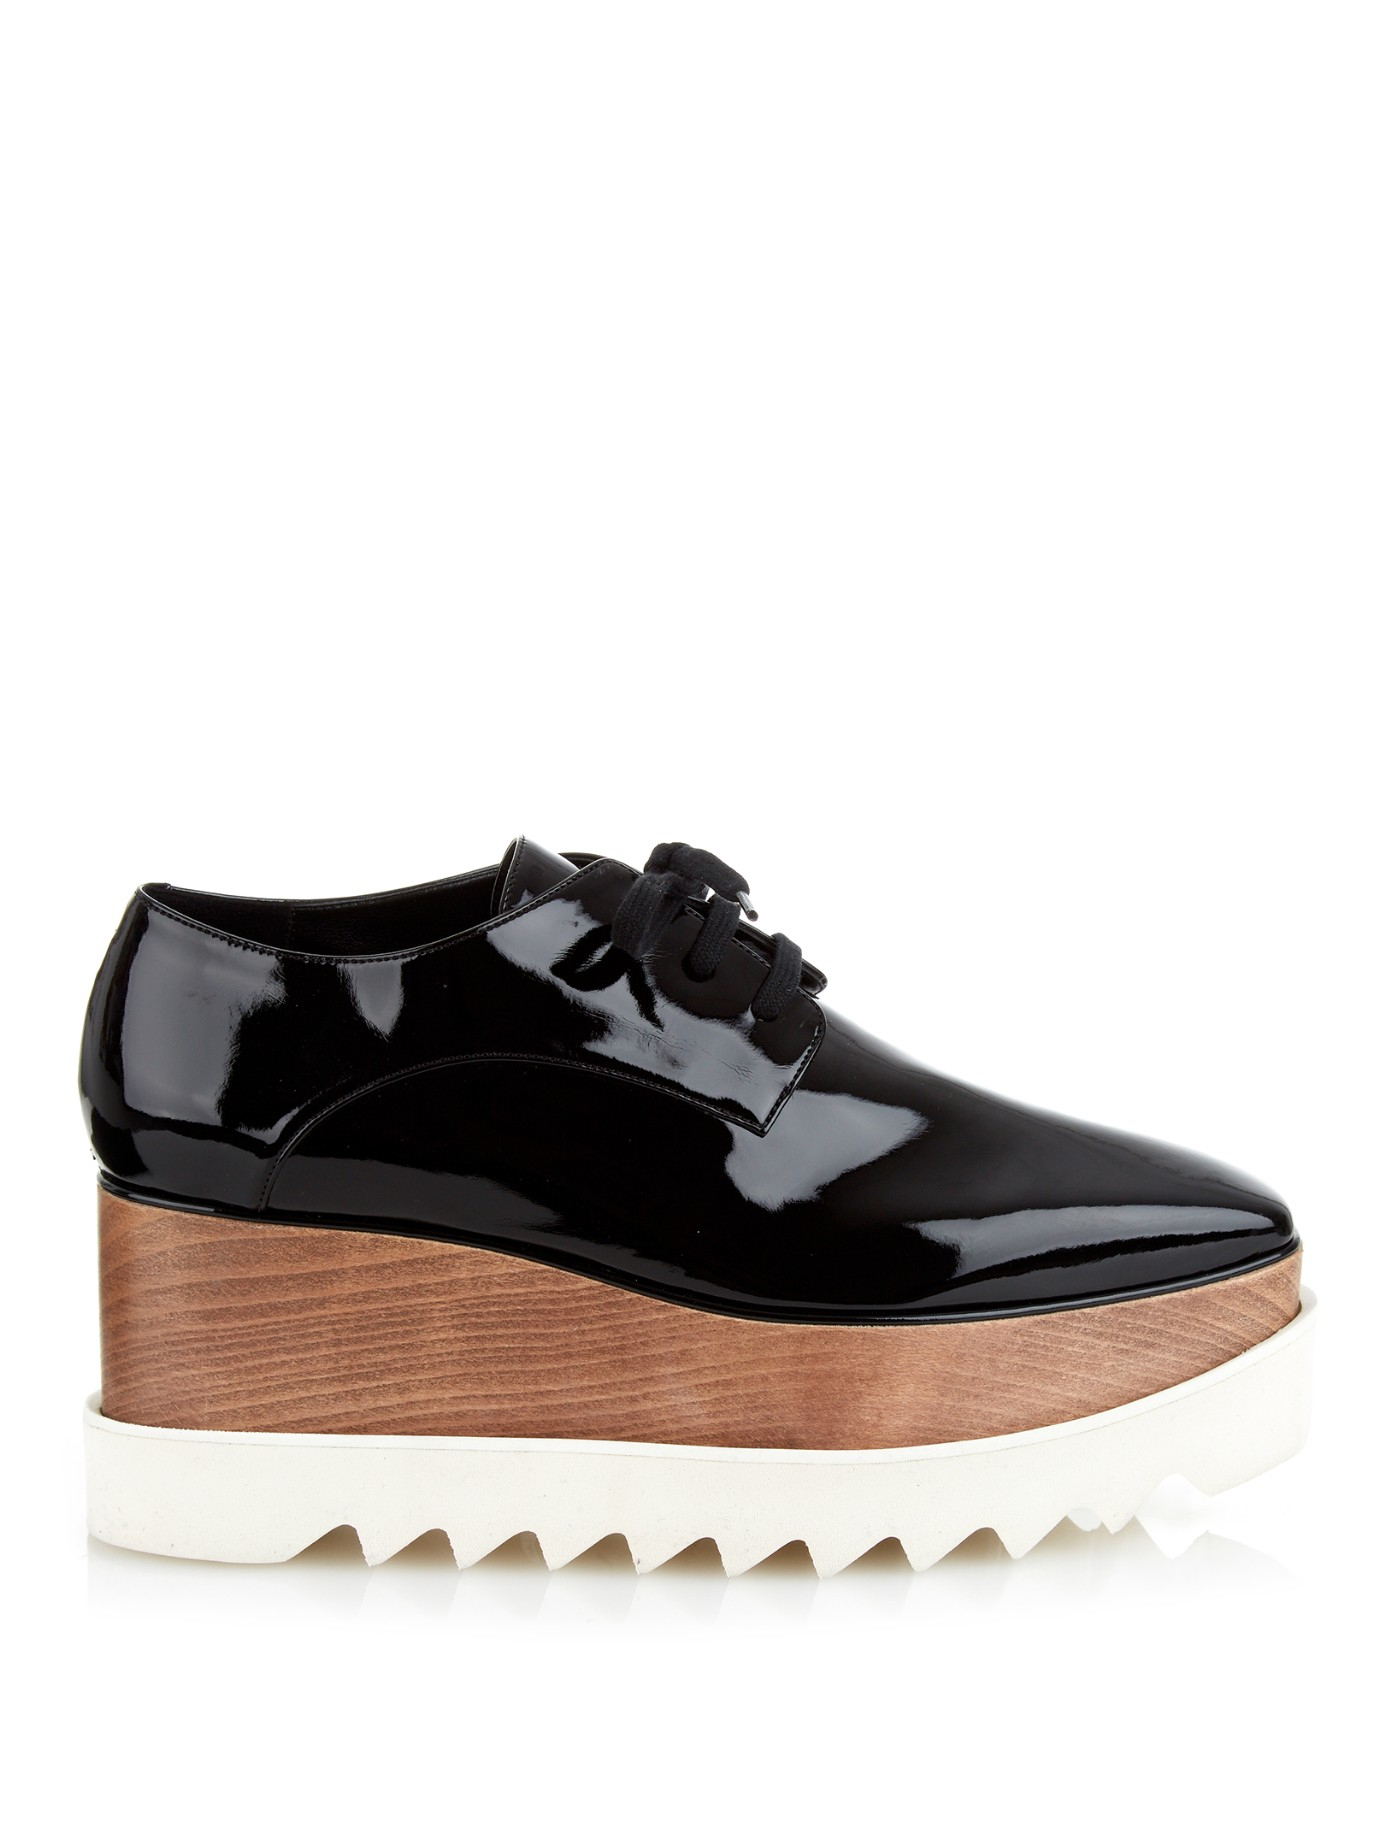 Stella mccartney Elyse Lace-up Platform Shoes in Black | Lyst